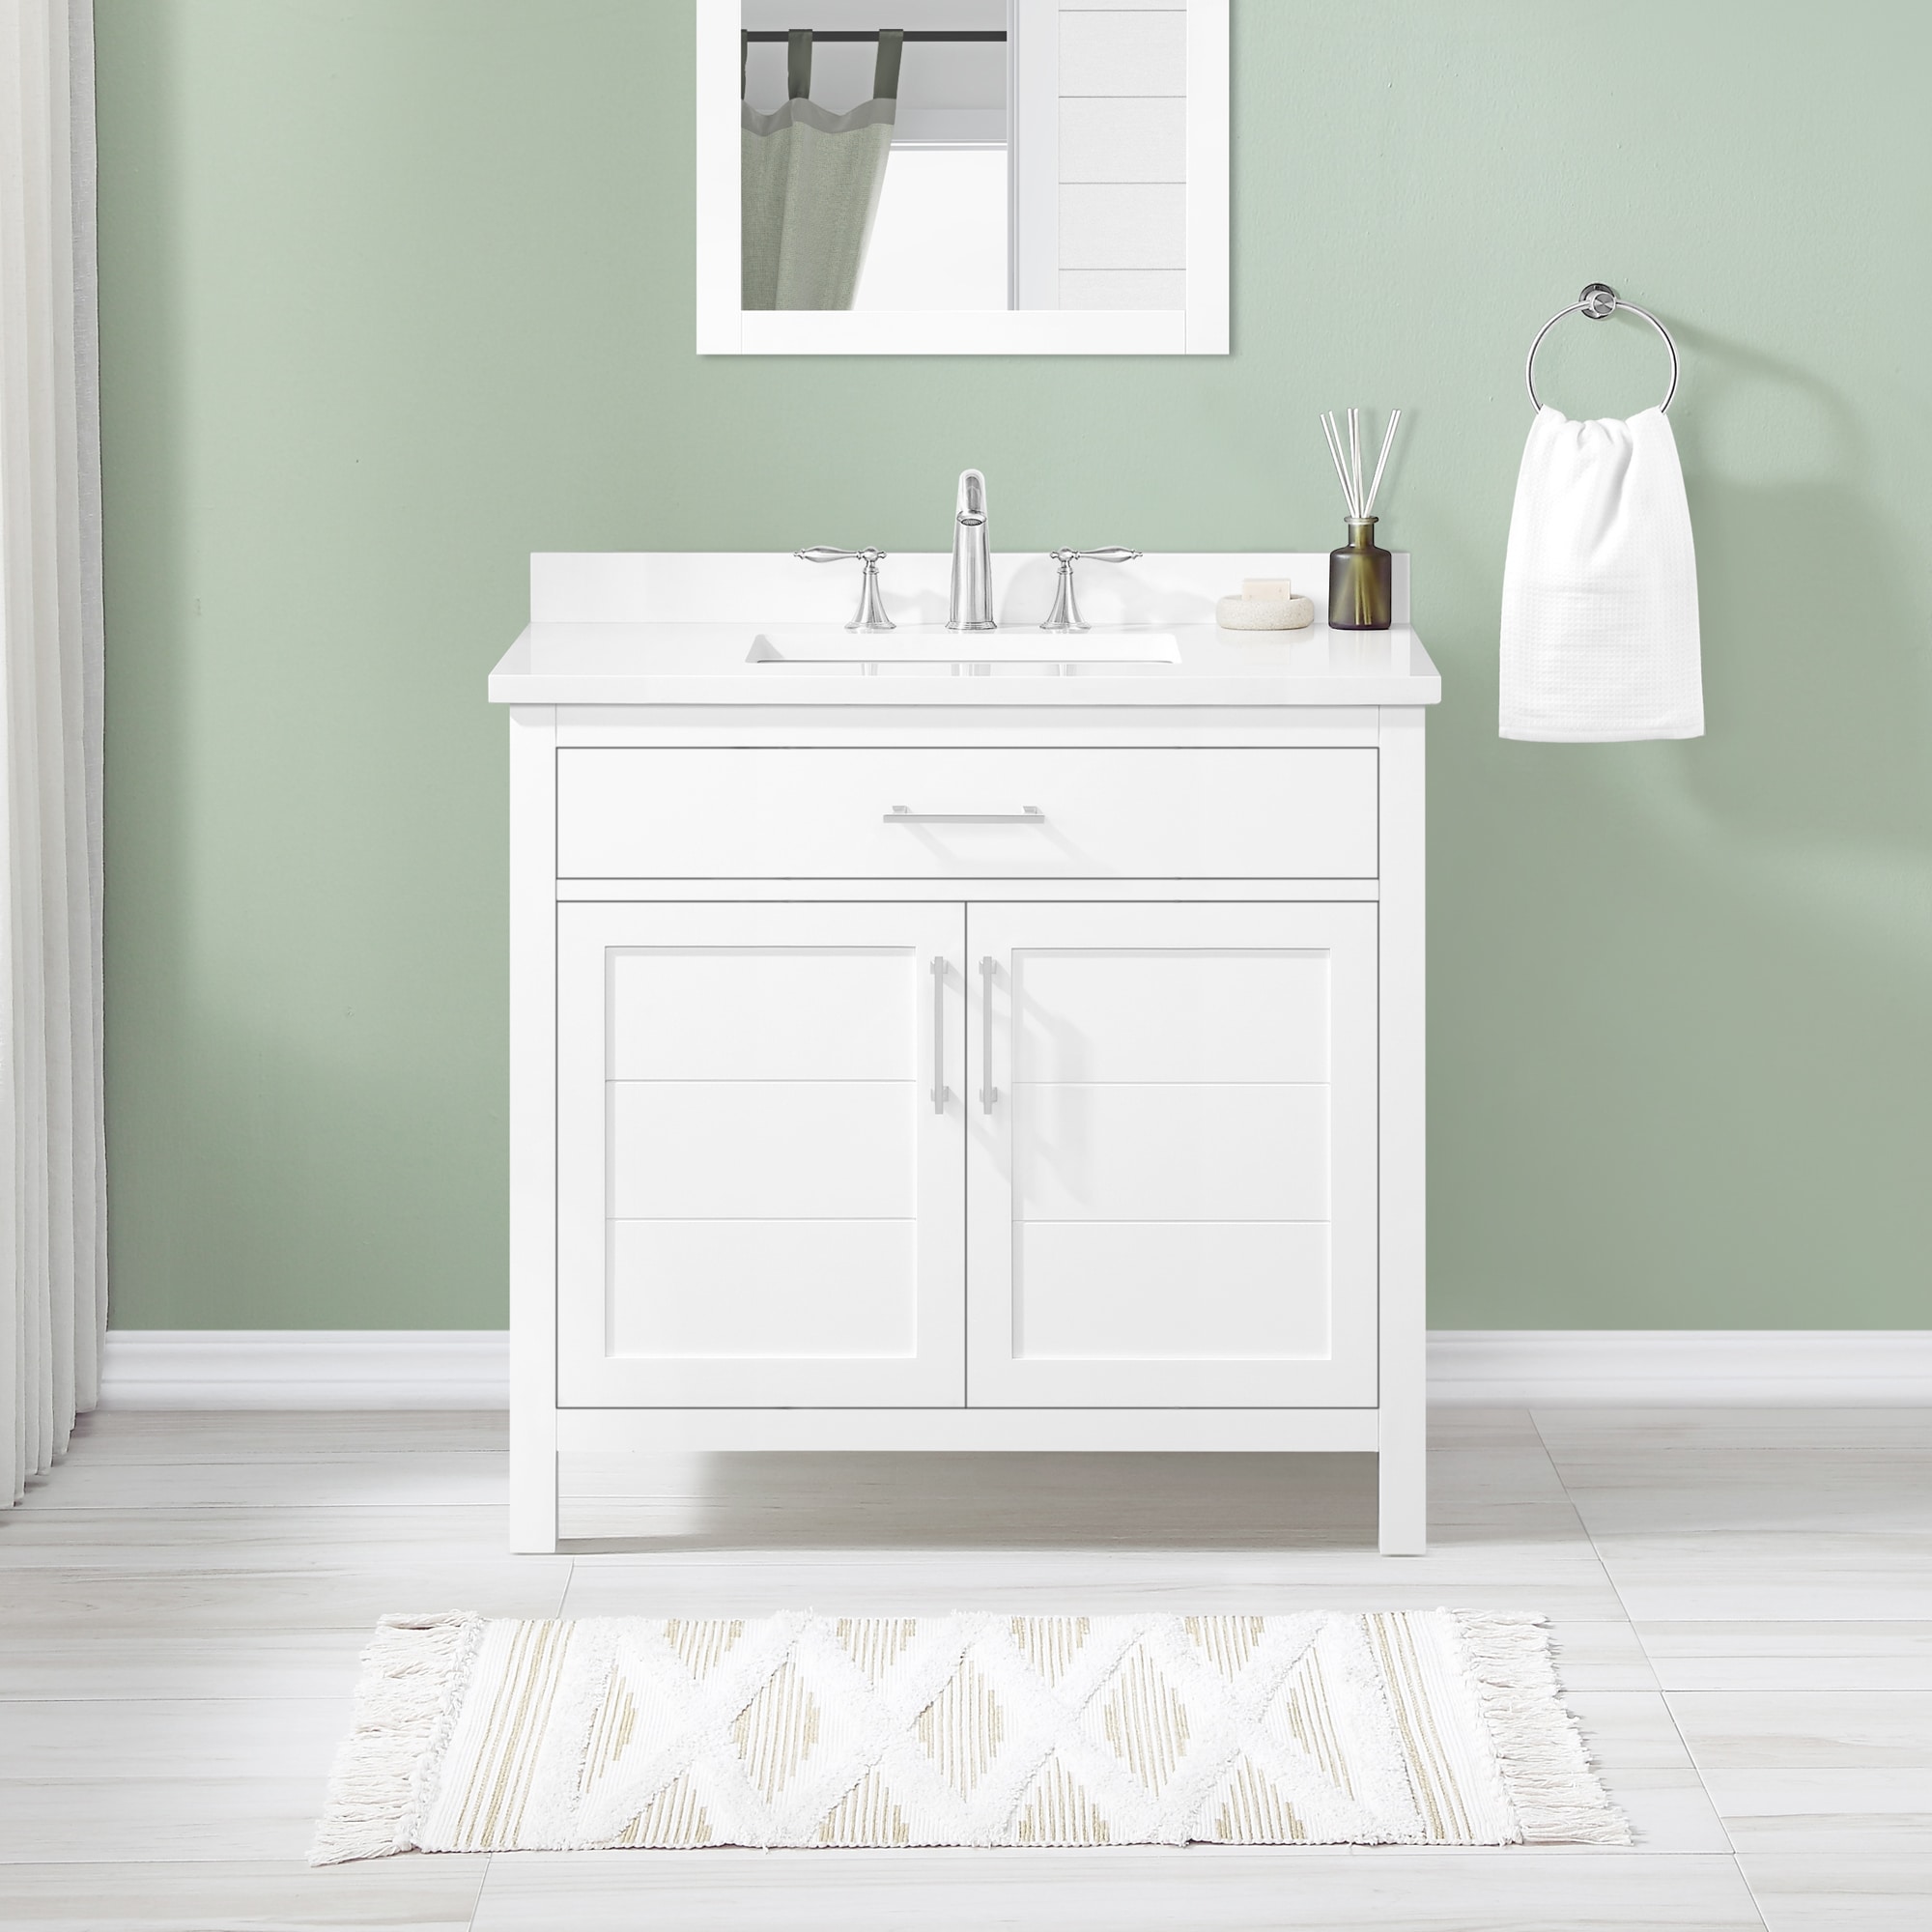 allen + roth Finkley 36-in White Undermount Single Sink Bathroom Vanity ...